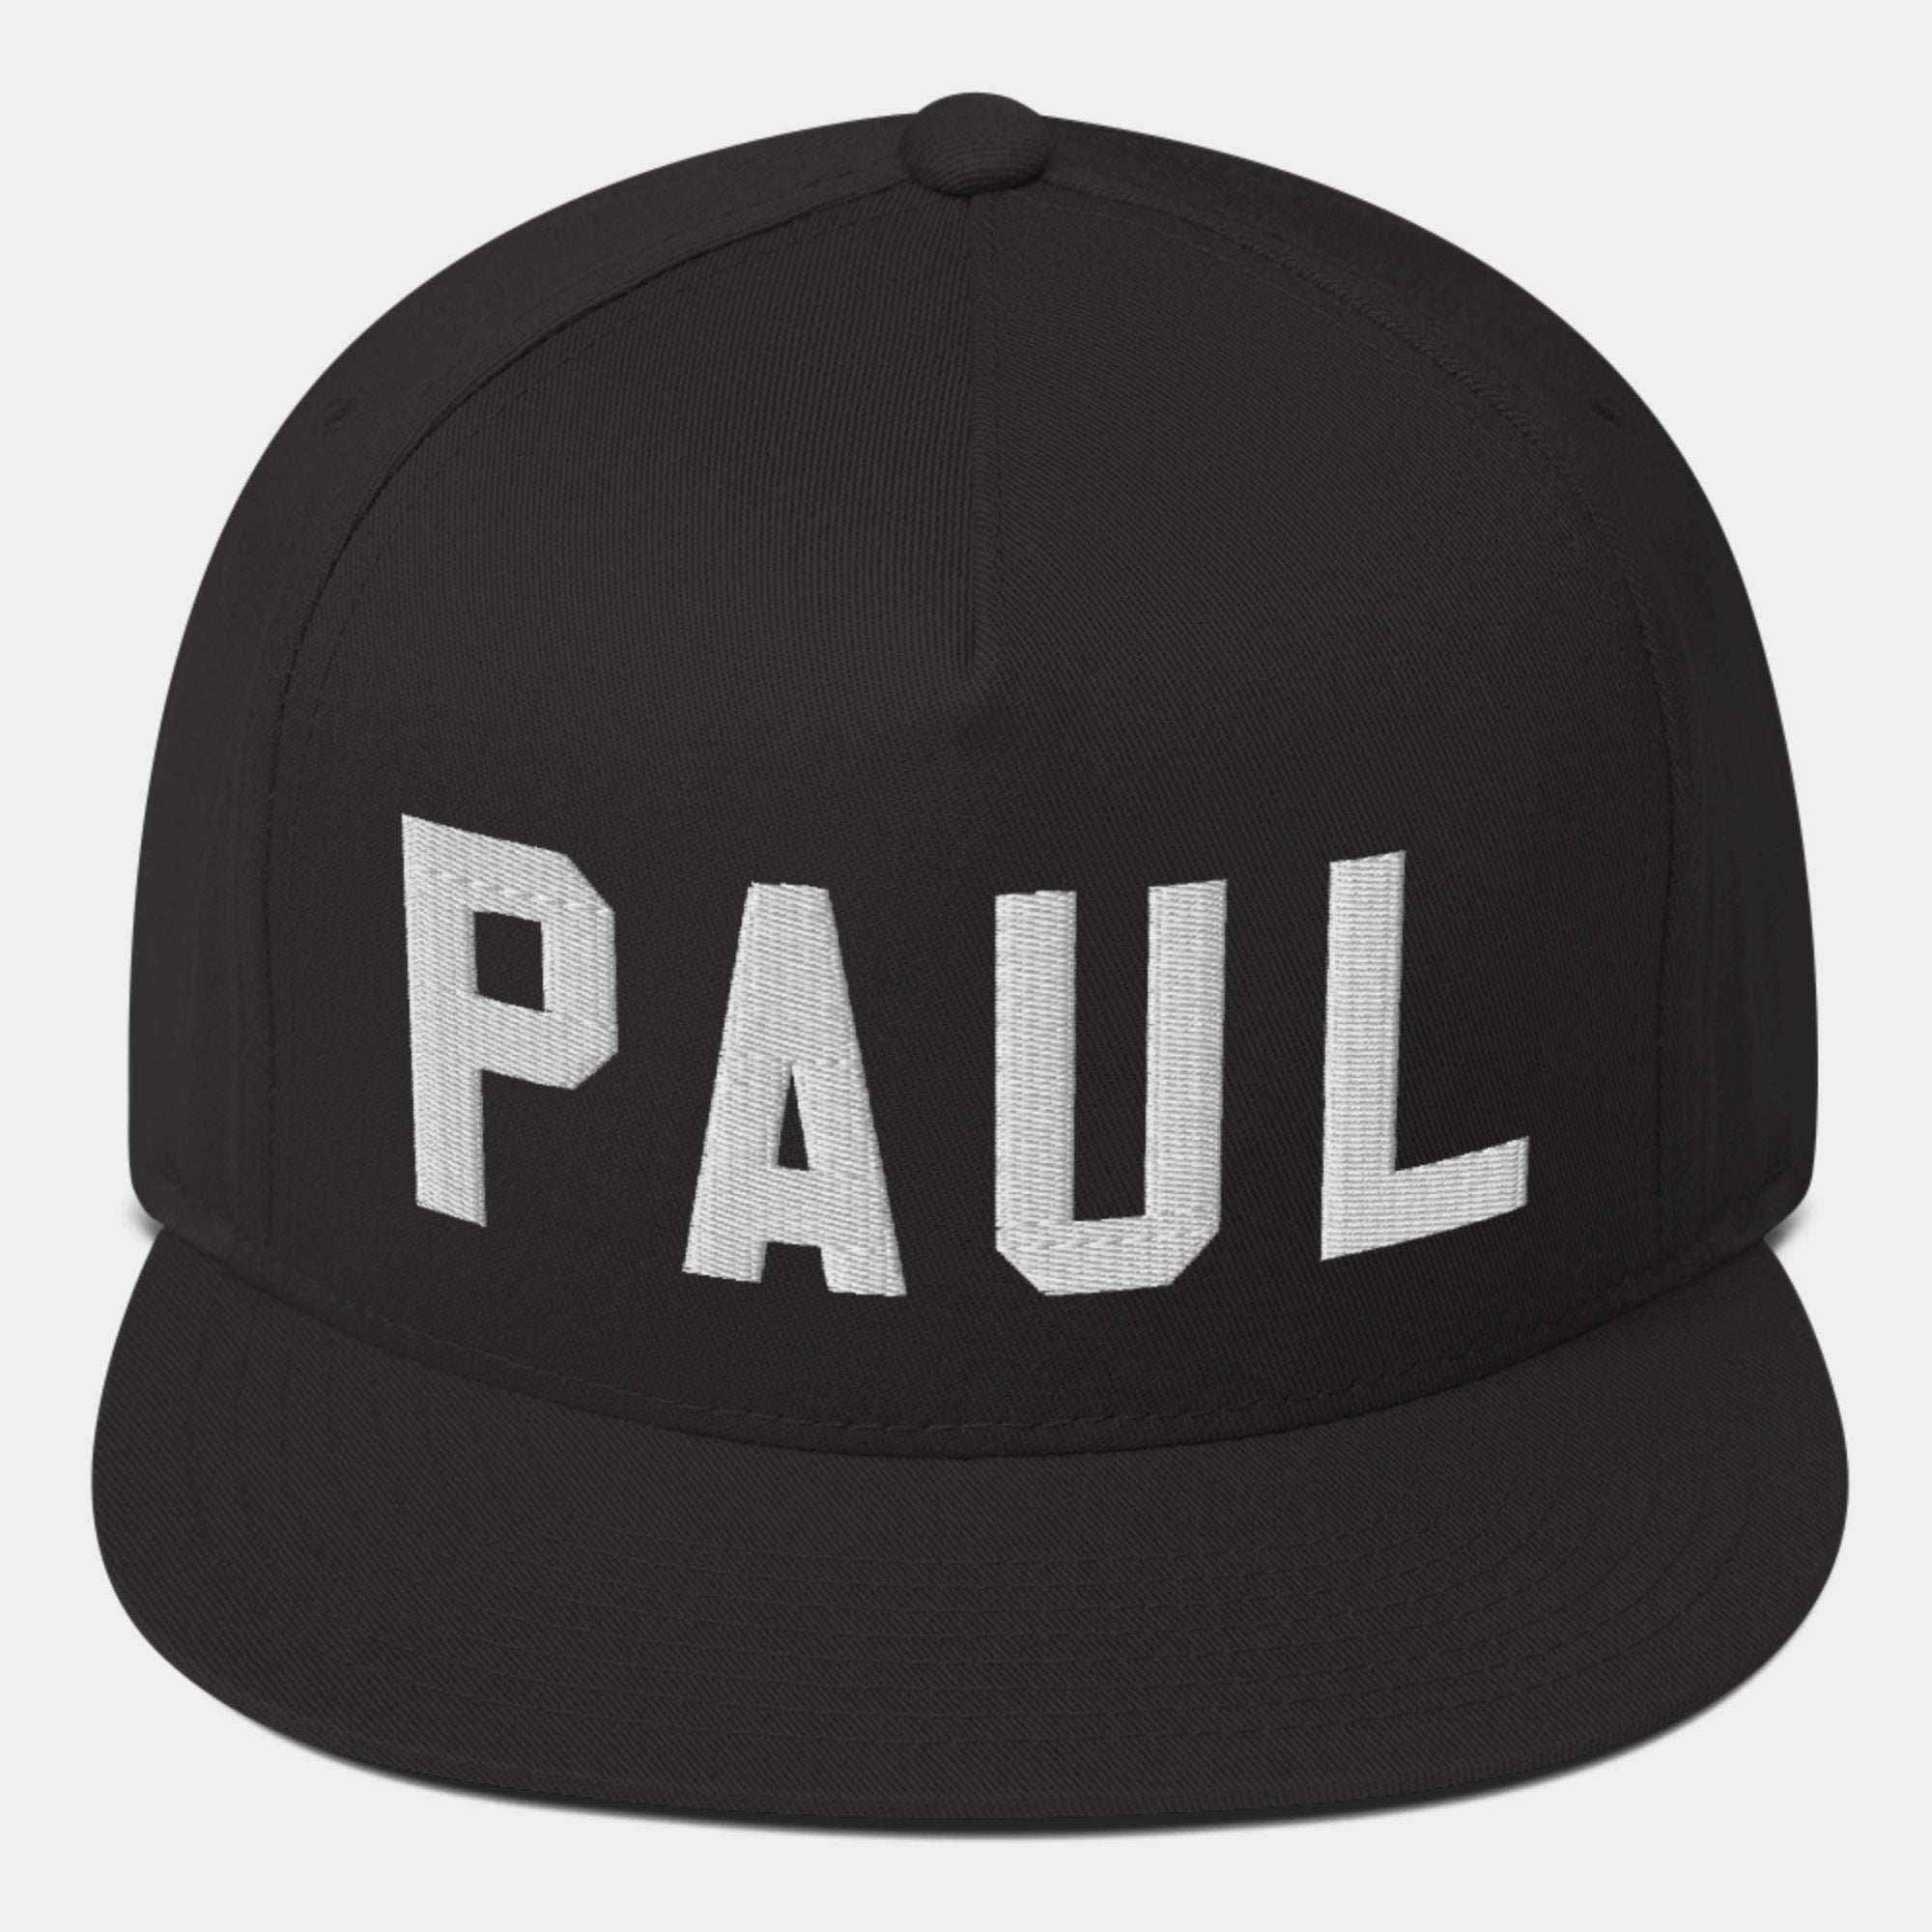 Iconic Paul (LAFC) Flat Bill Cap